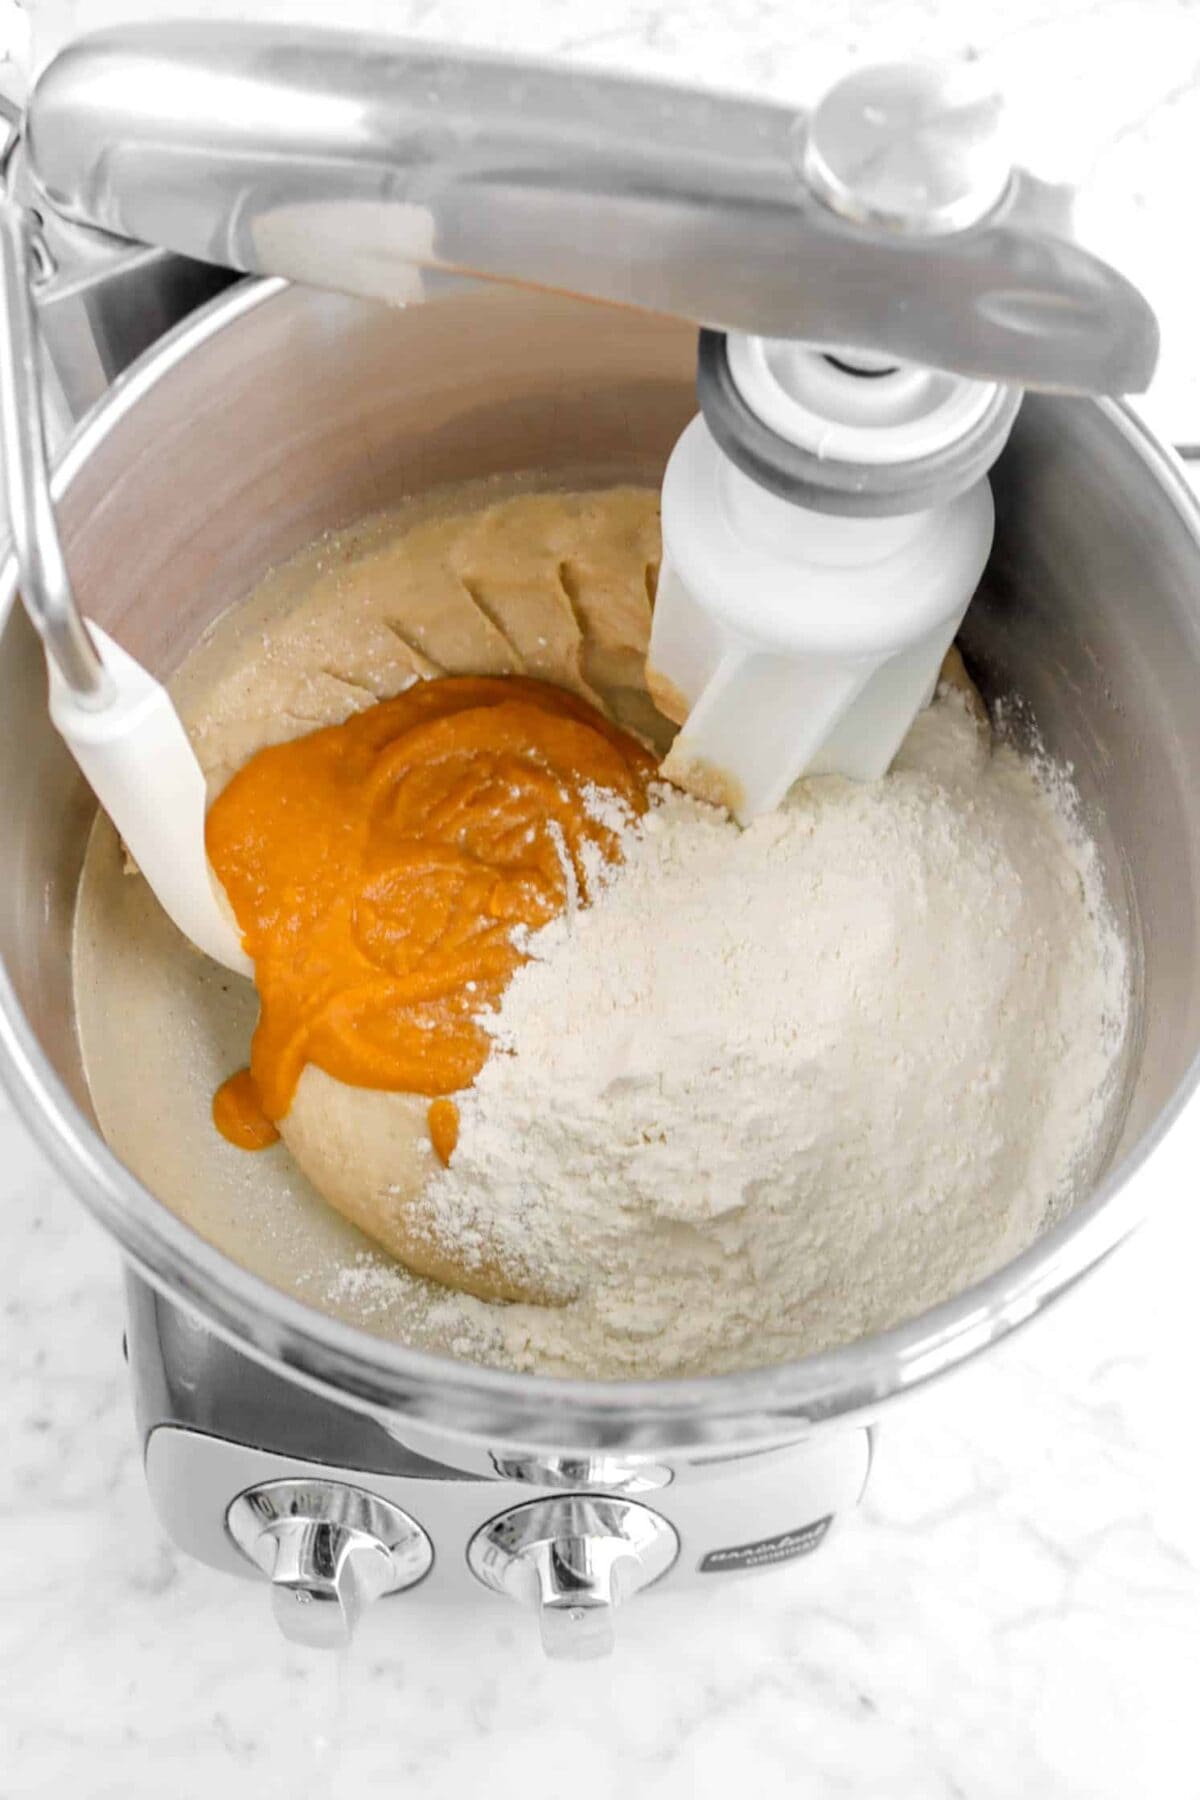 pumpkin and flour added to dough